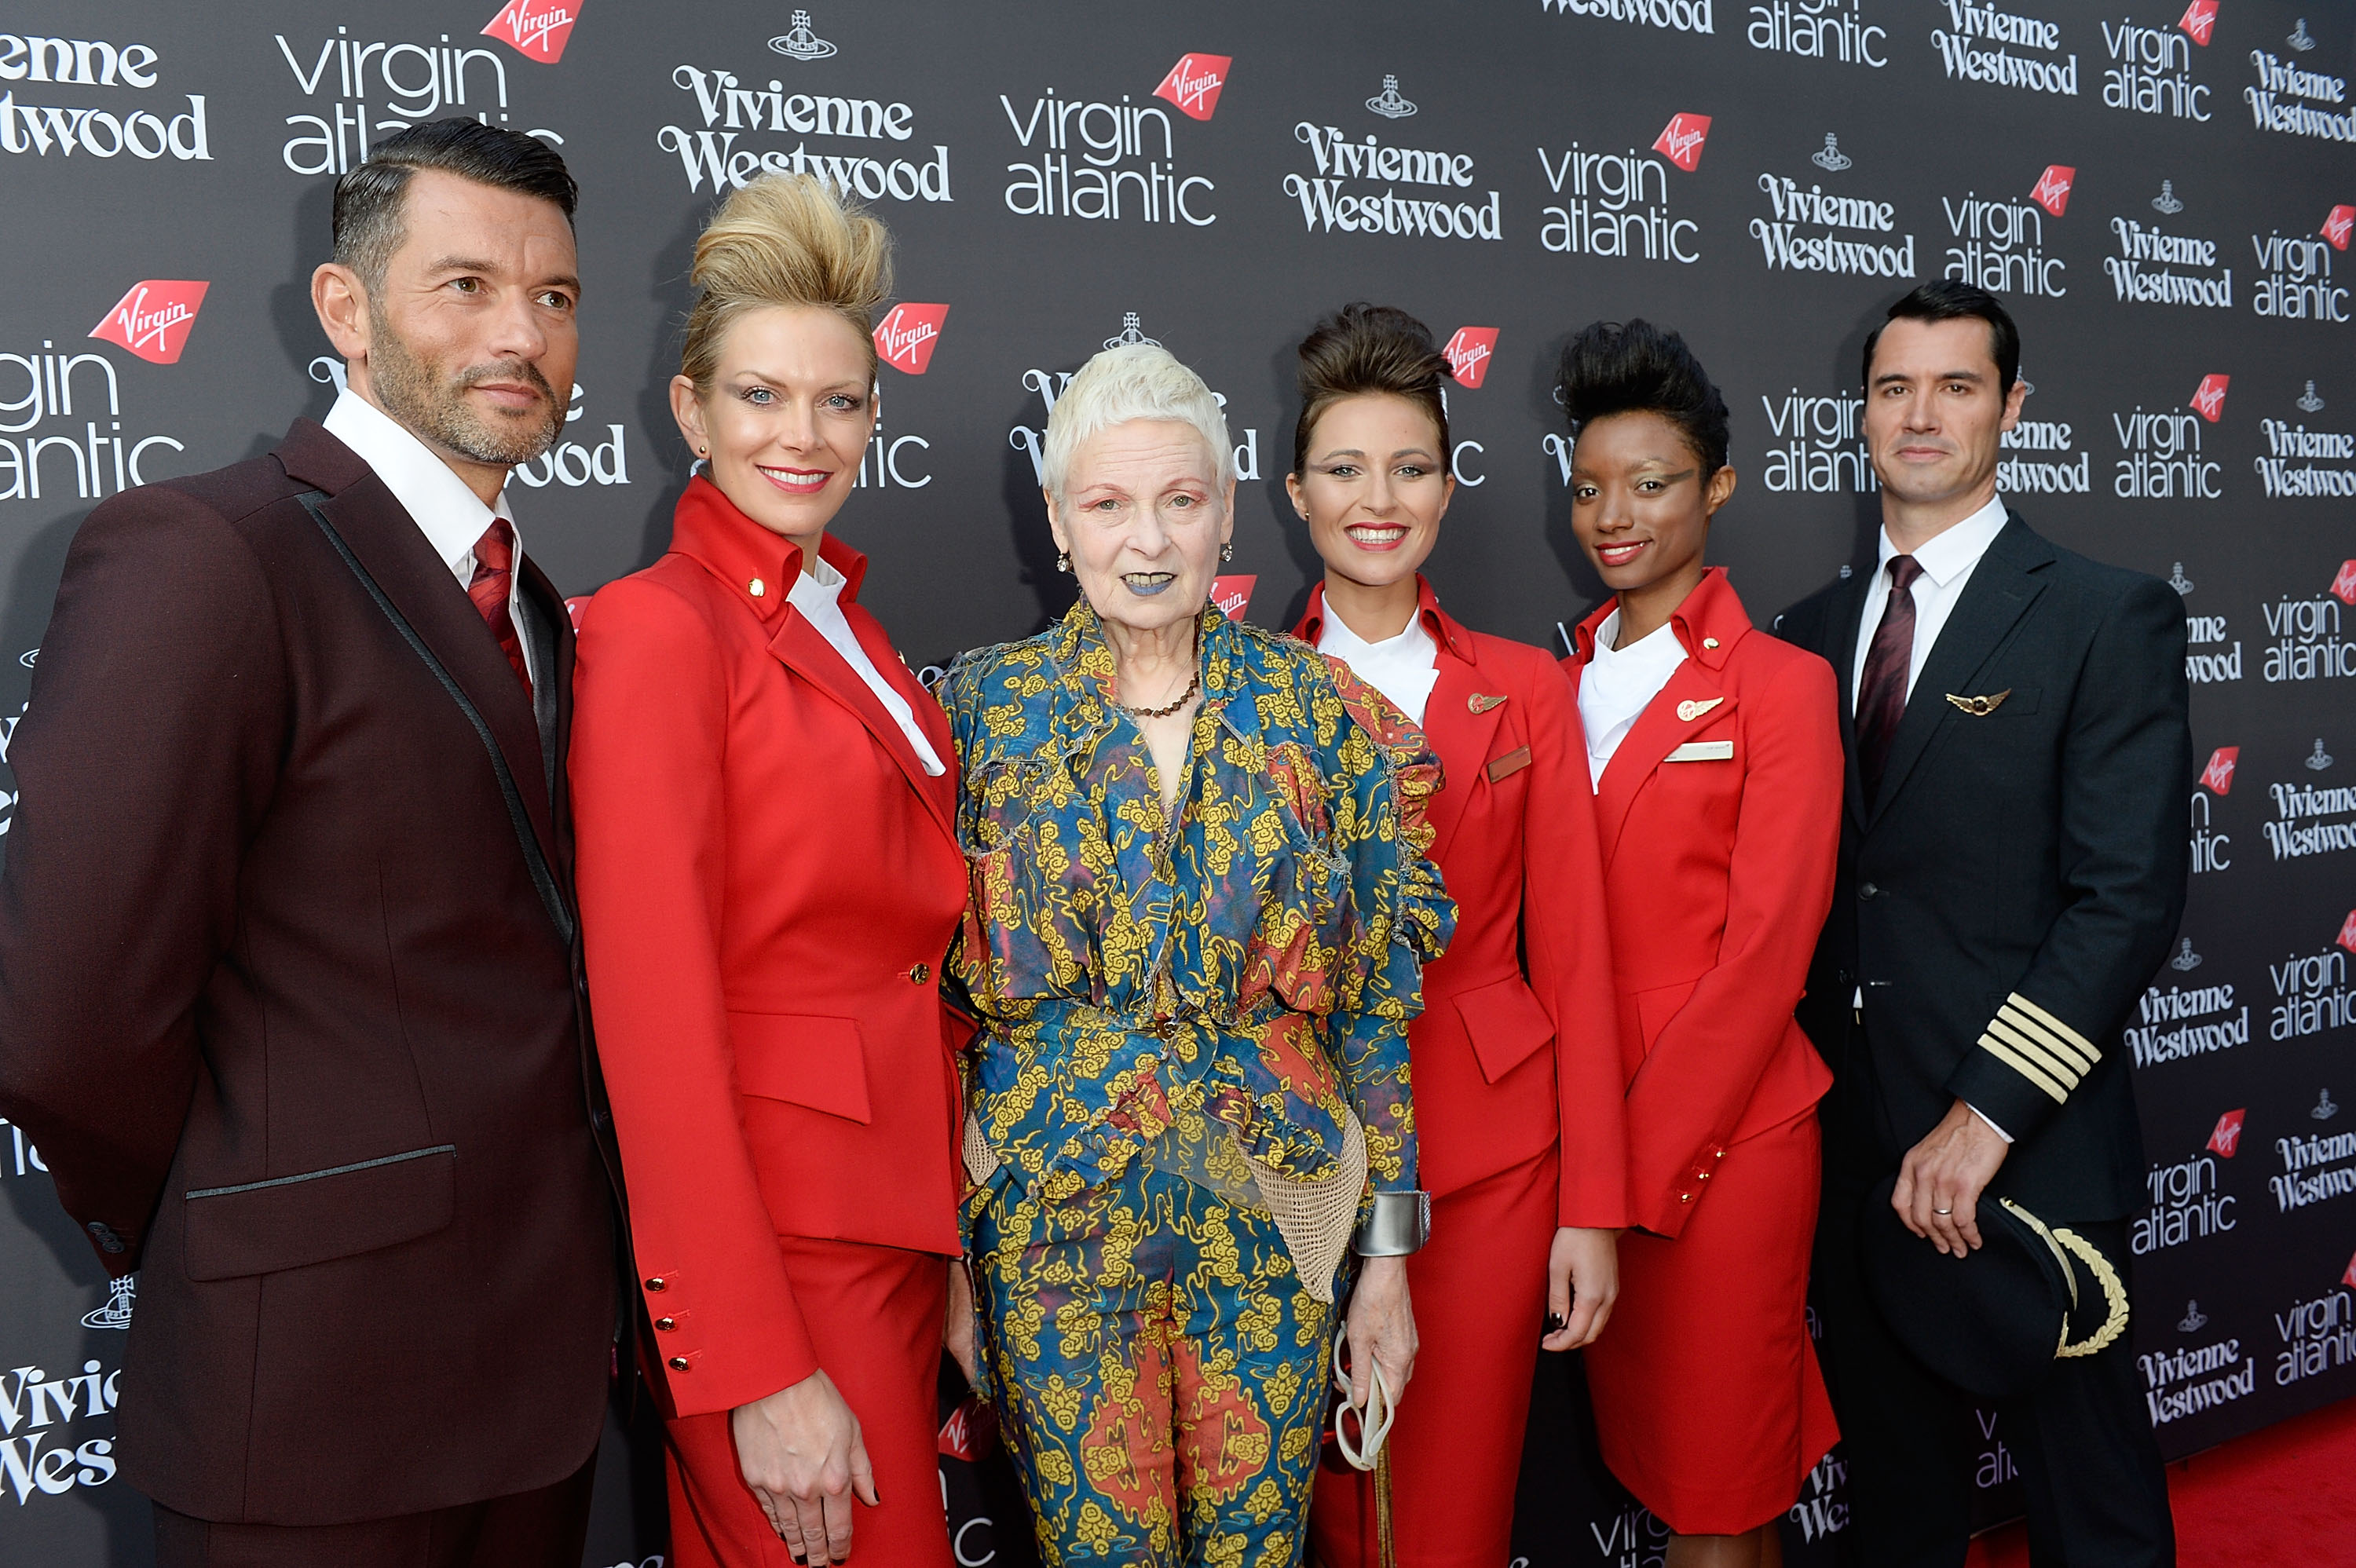 Launch Party To Celebrate Virgin Atlantic's New Vivienne Westwood Uniform Collection